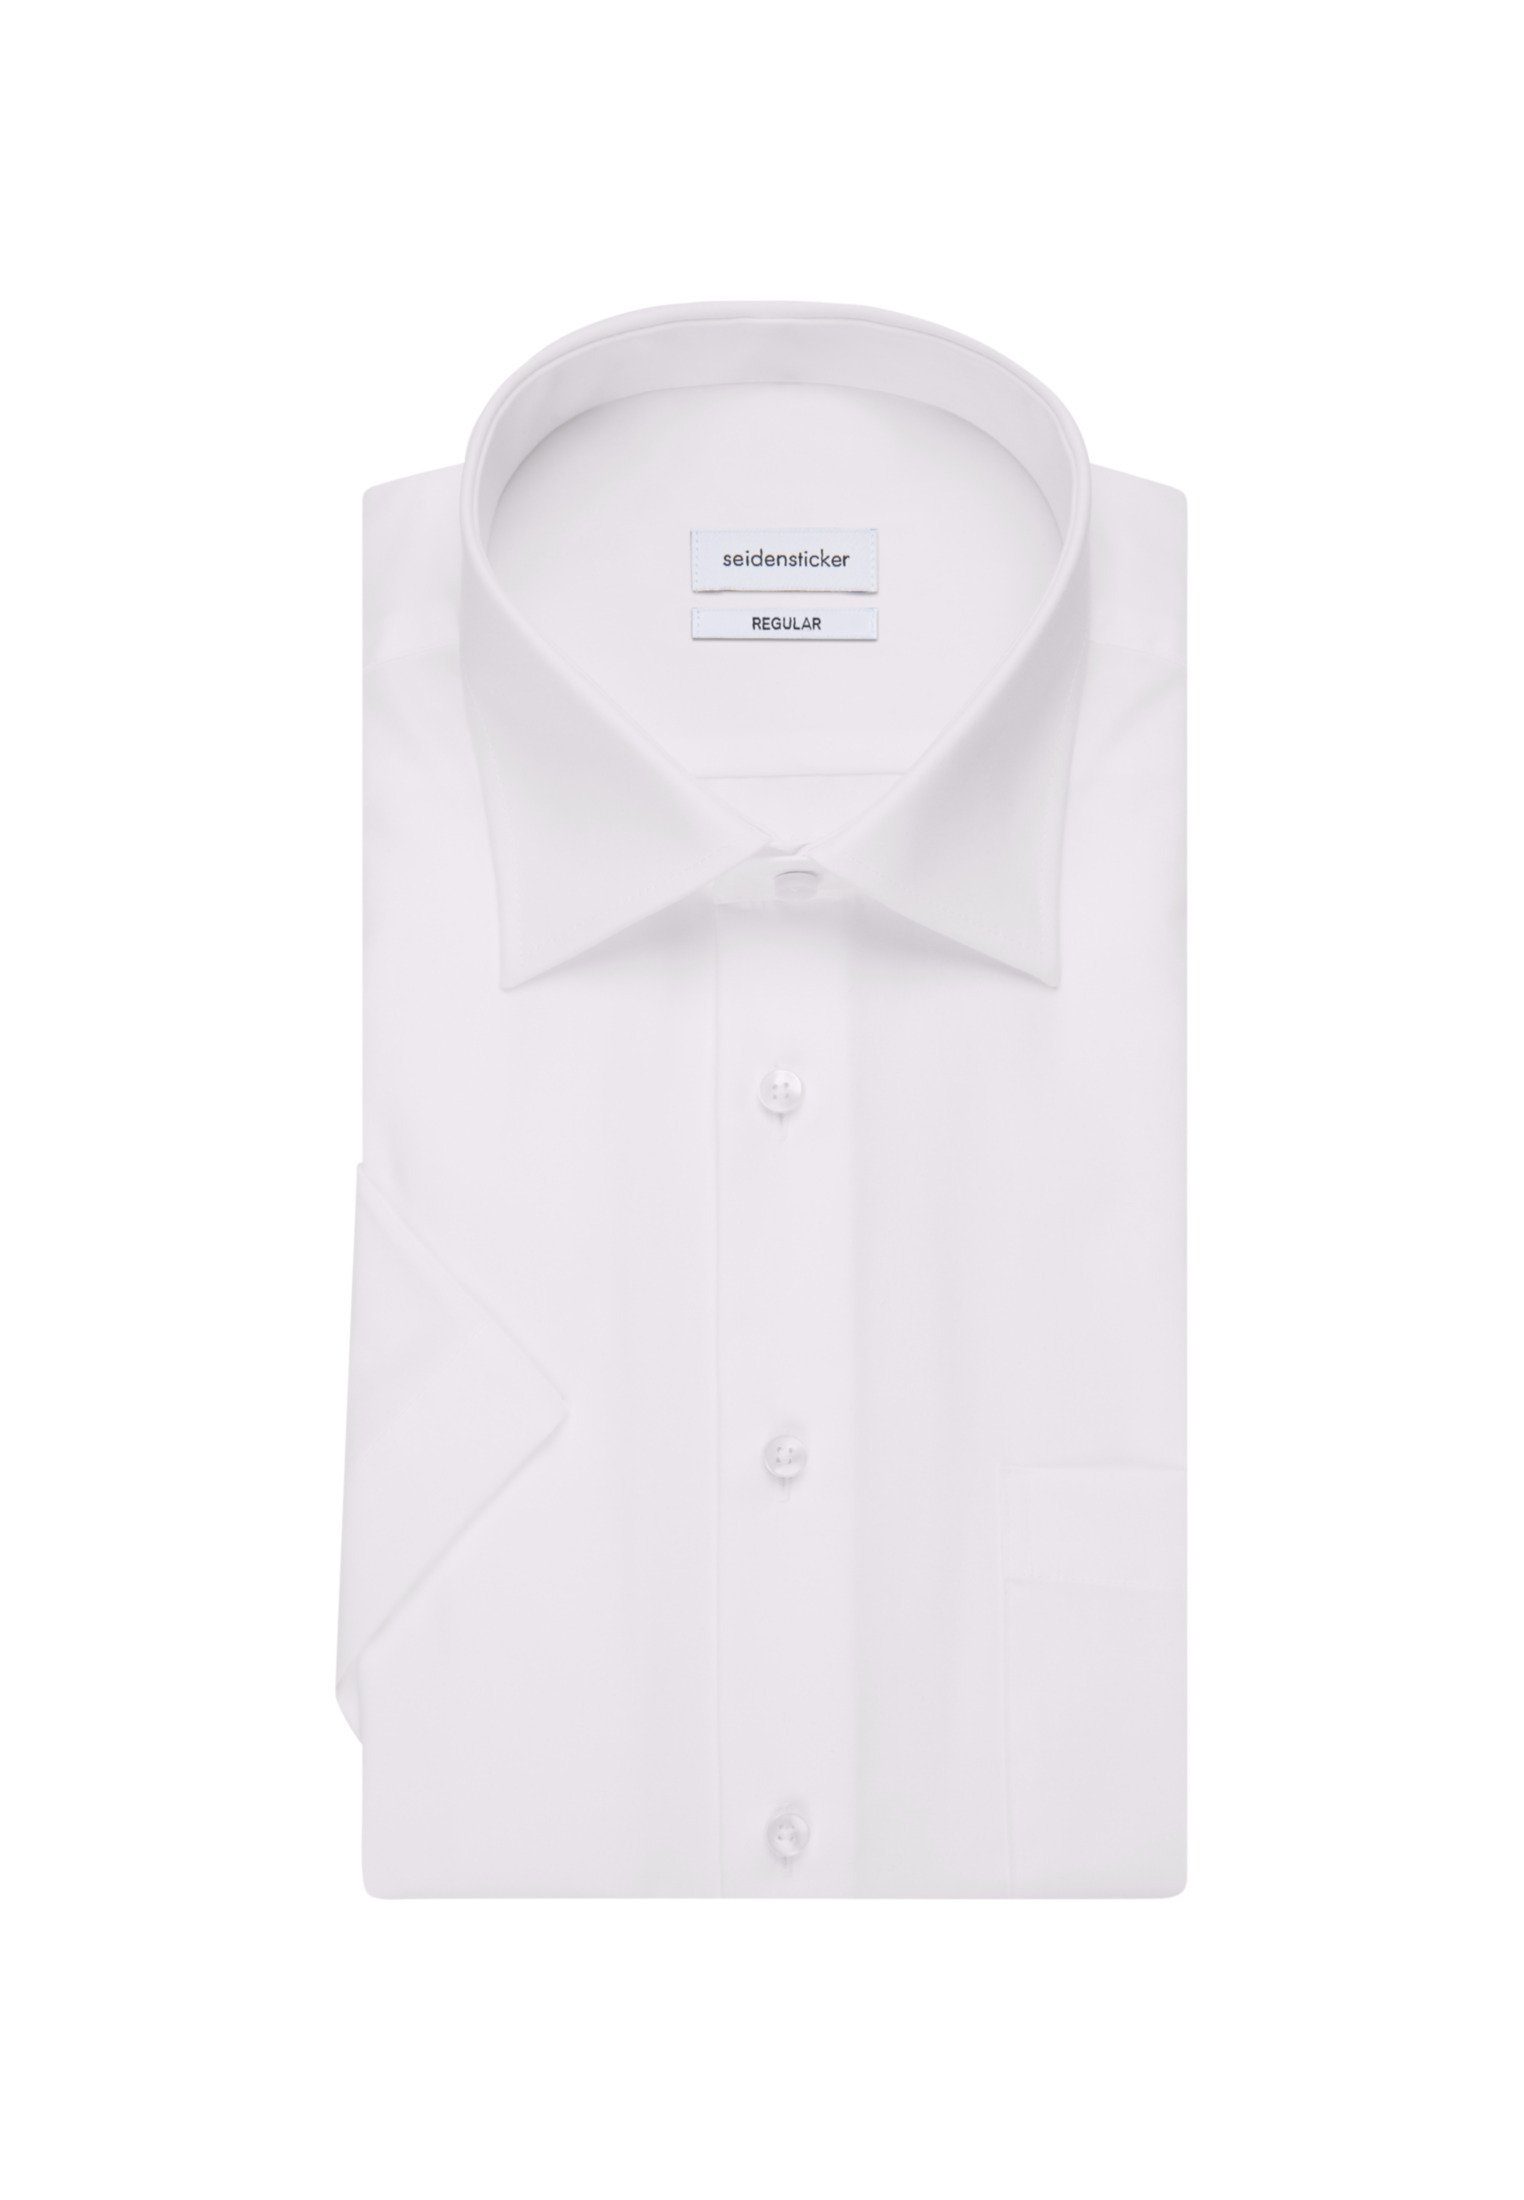 seidensticker Businesshemd Regular Kentkragen Uni Regular Weiß